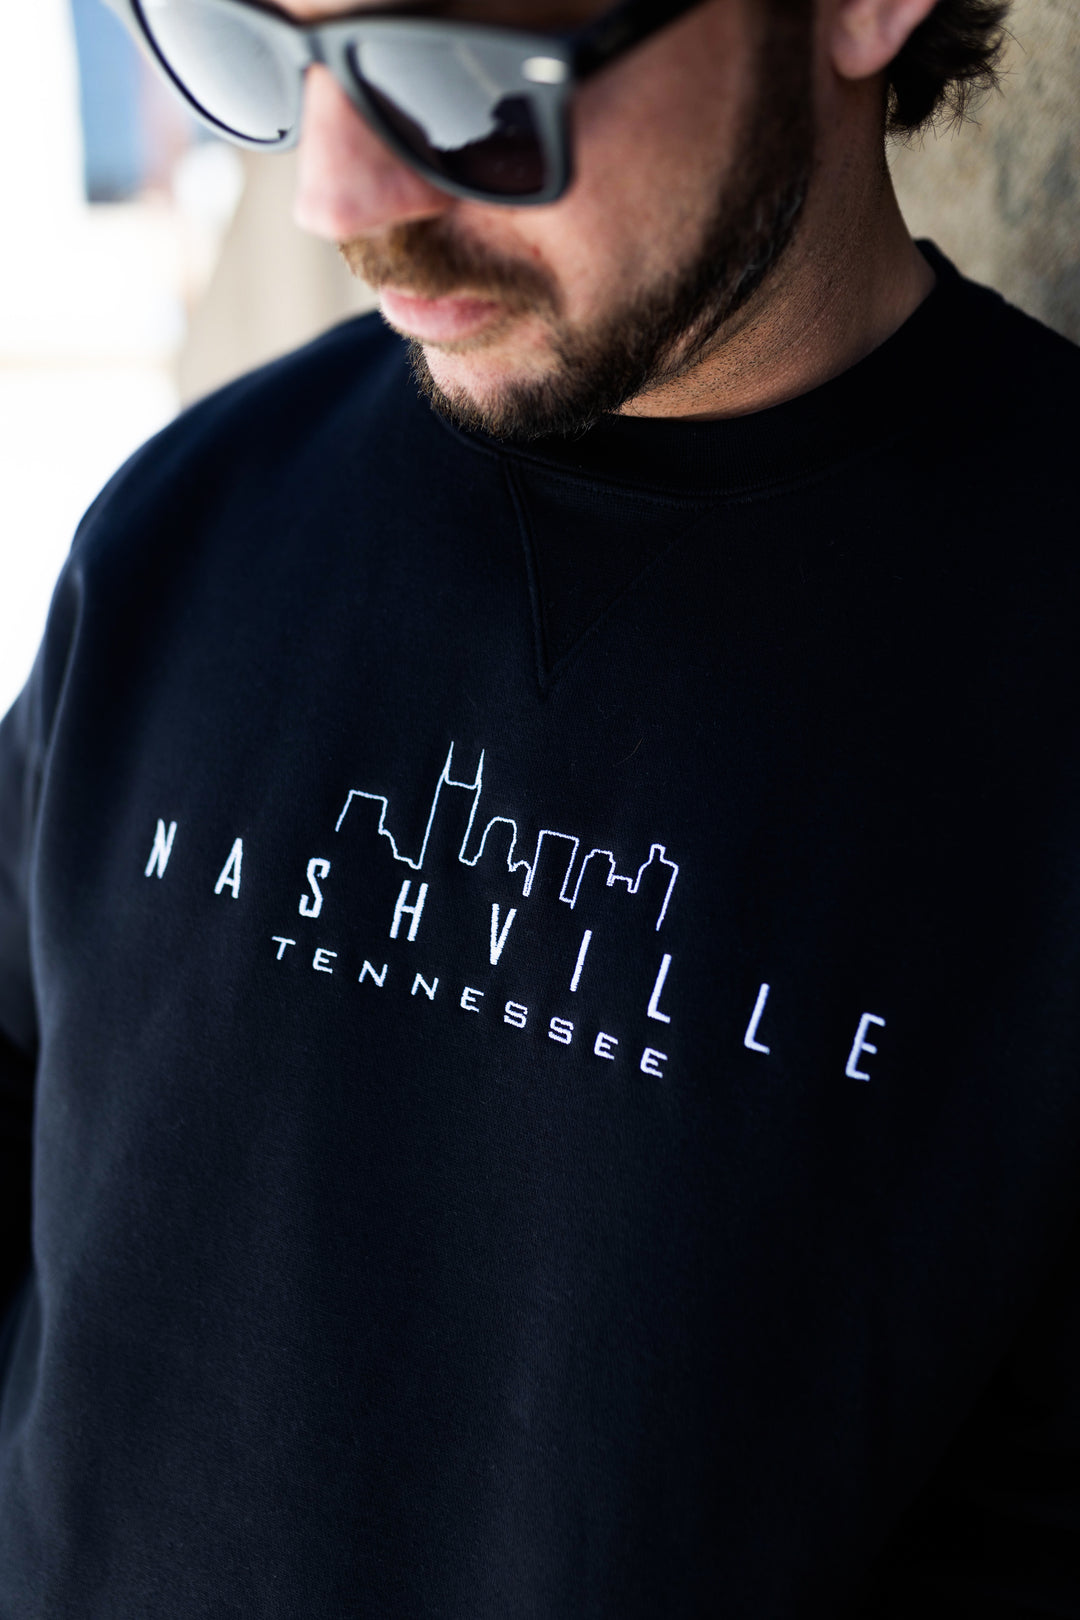 Nashville Skyline Crewneck [Black]